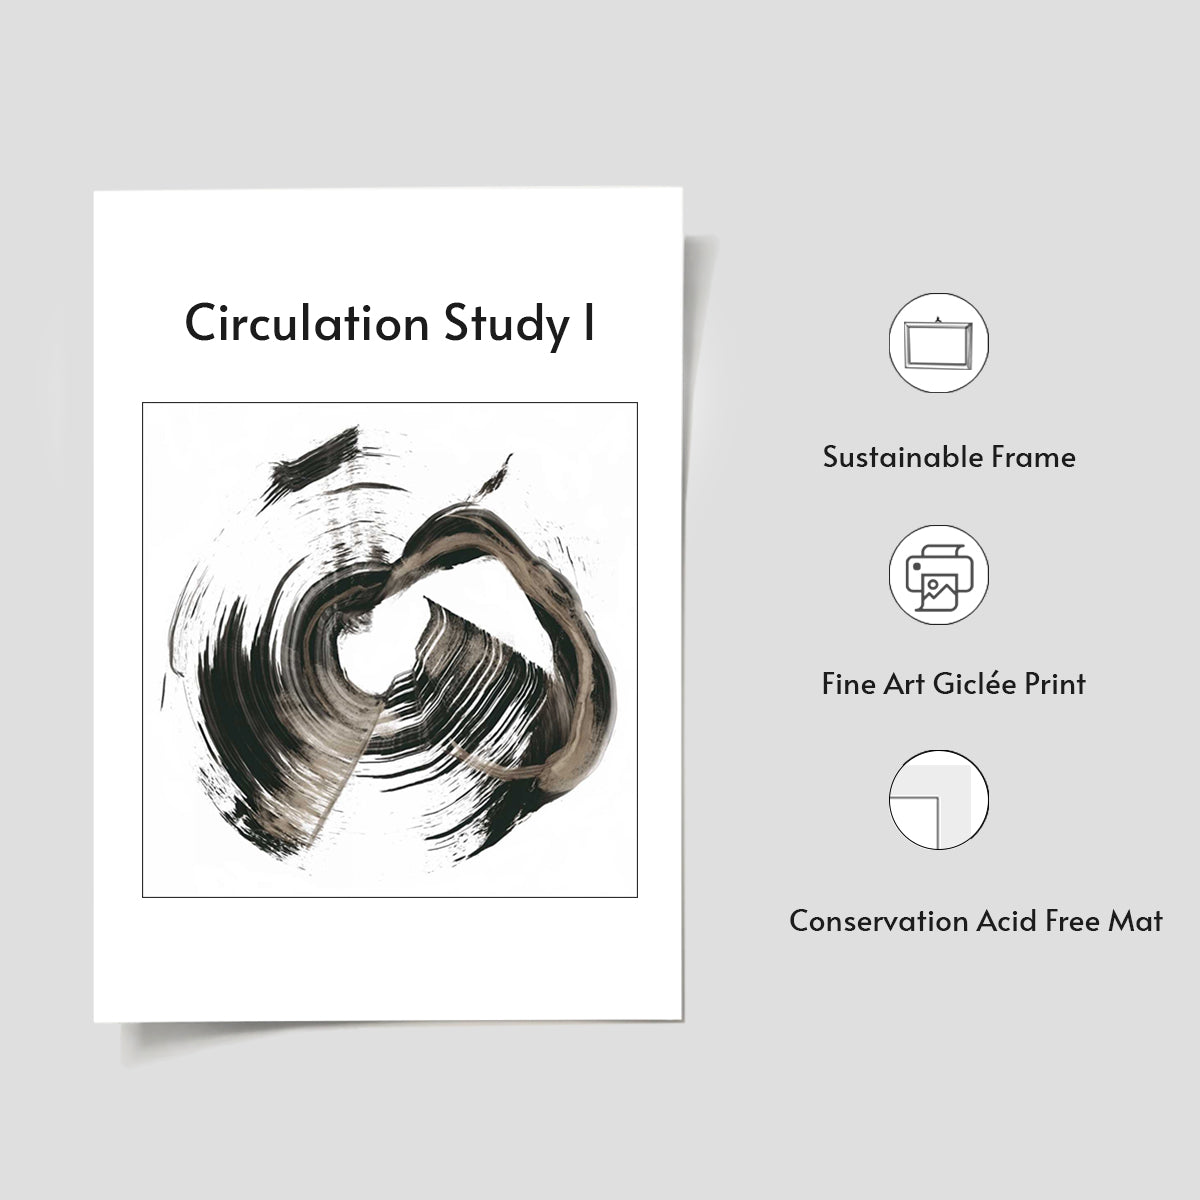 Circulation Study I